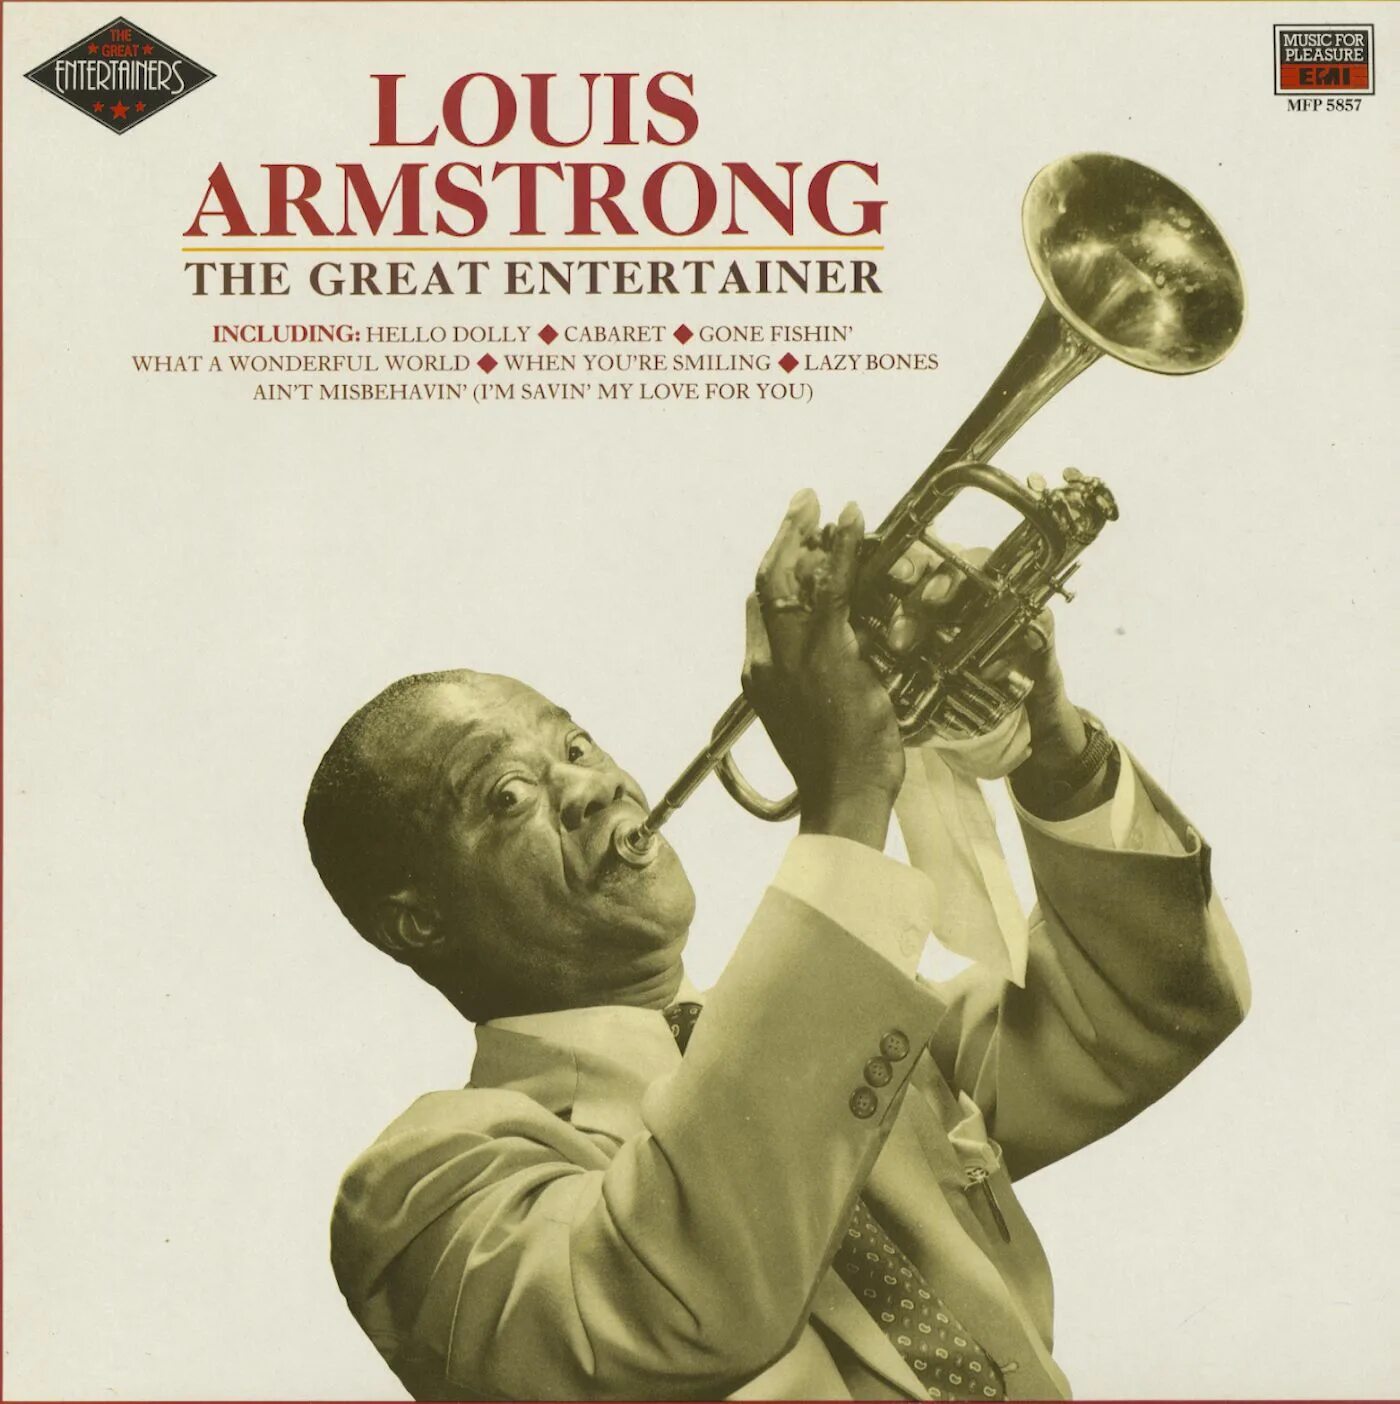 Армстронг хелло долли. Louis Armstrong - hello Dolly обложка. Louis Armstrong - hello, Dolly! (1964) Обложка. Луи Армстронг Хелло Долли. Джаз Луи Армстронг с группой.